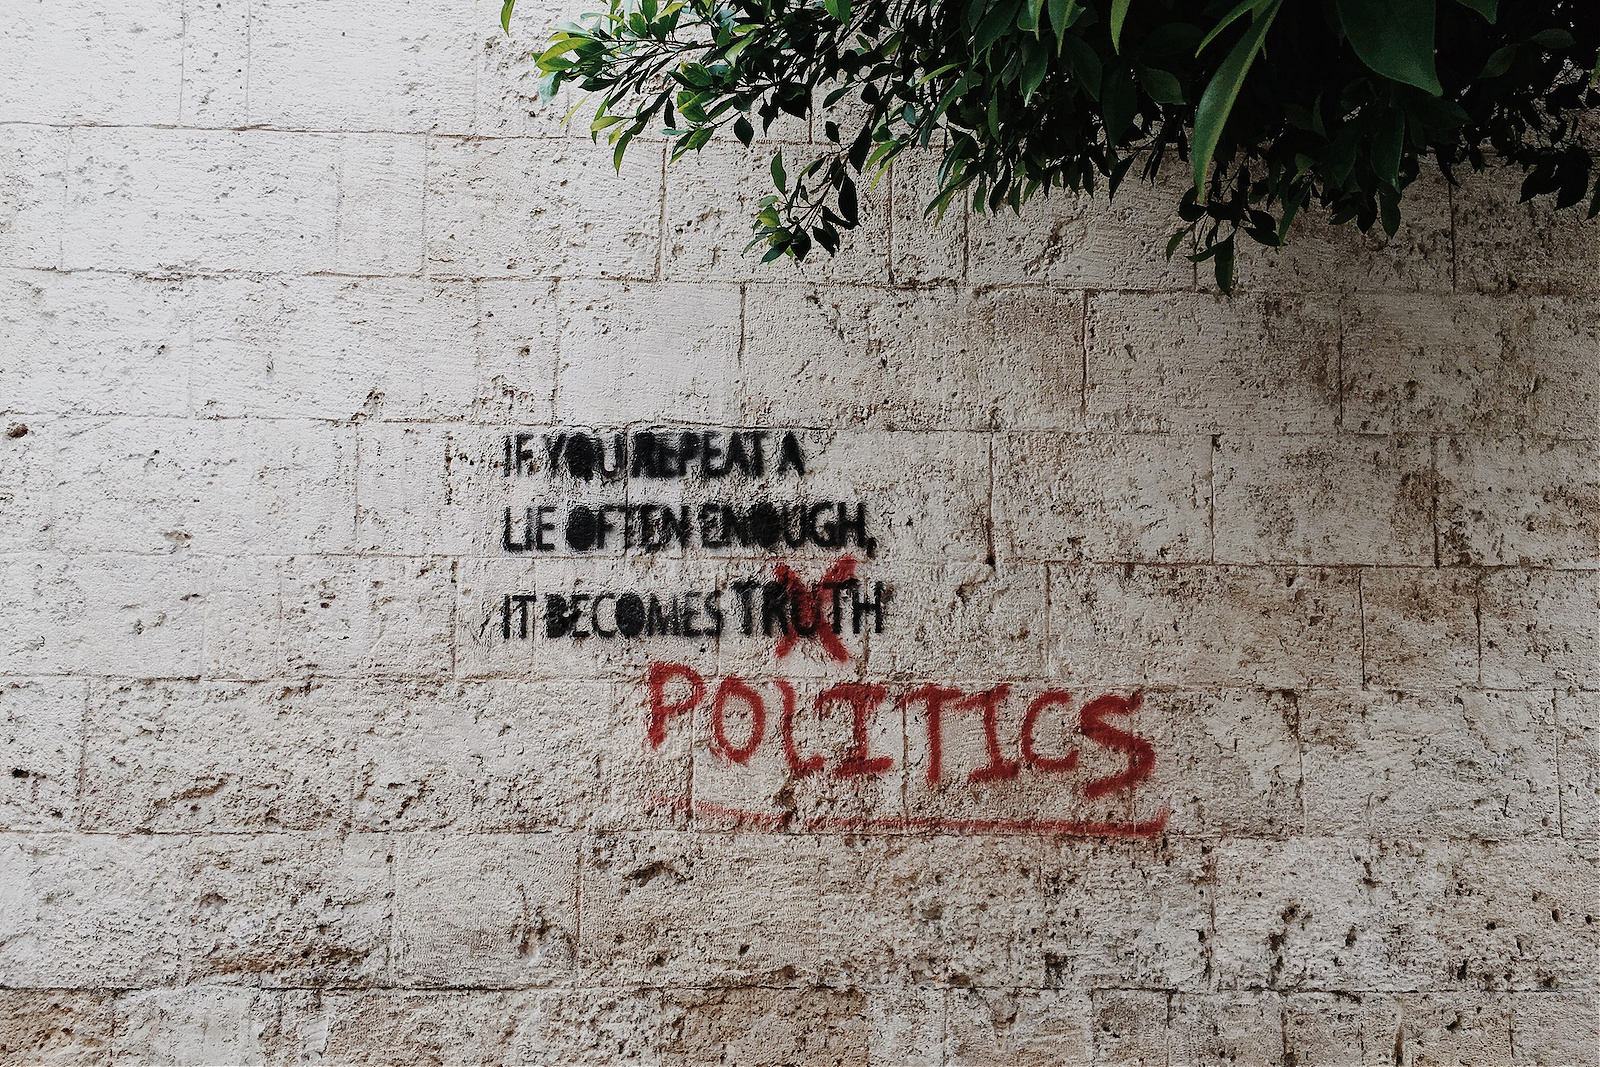 Graffiti in Beirut, Lebanon